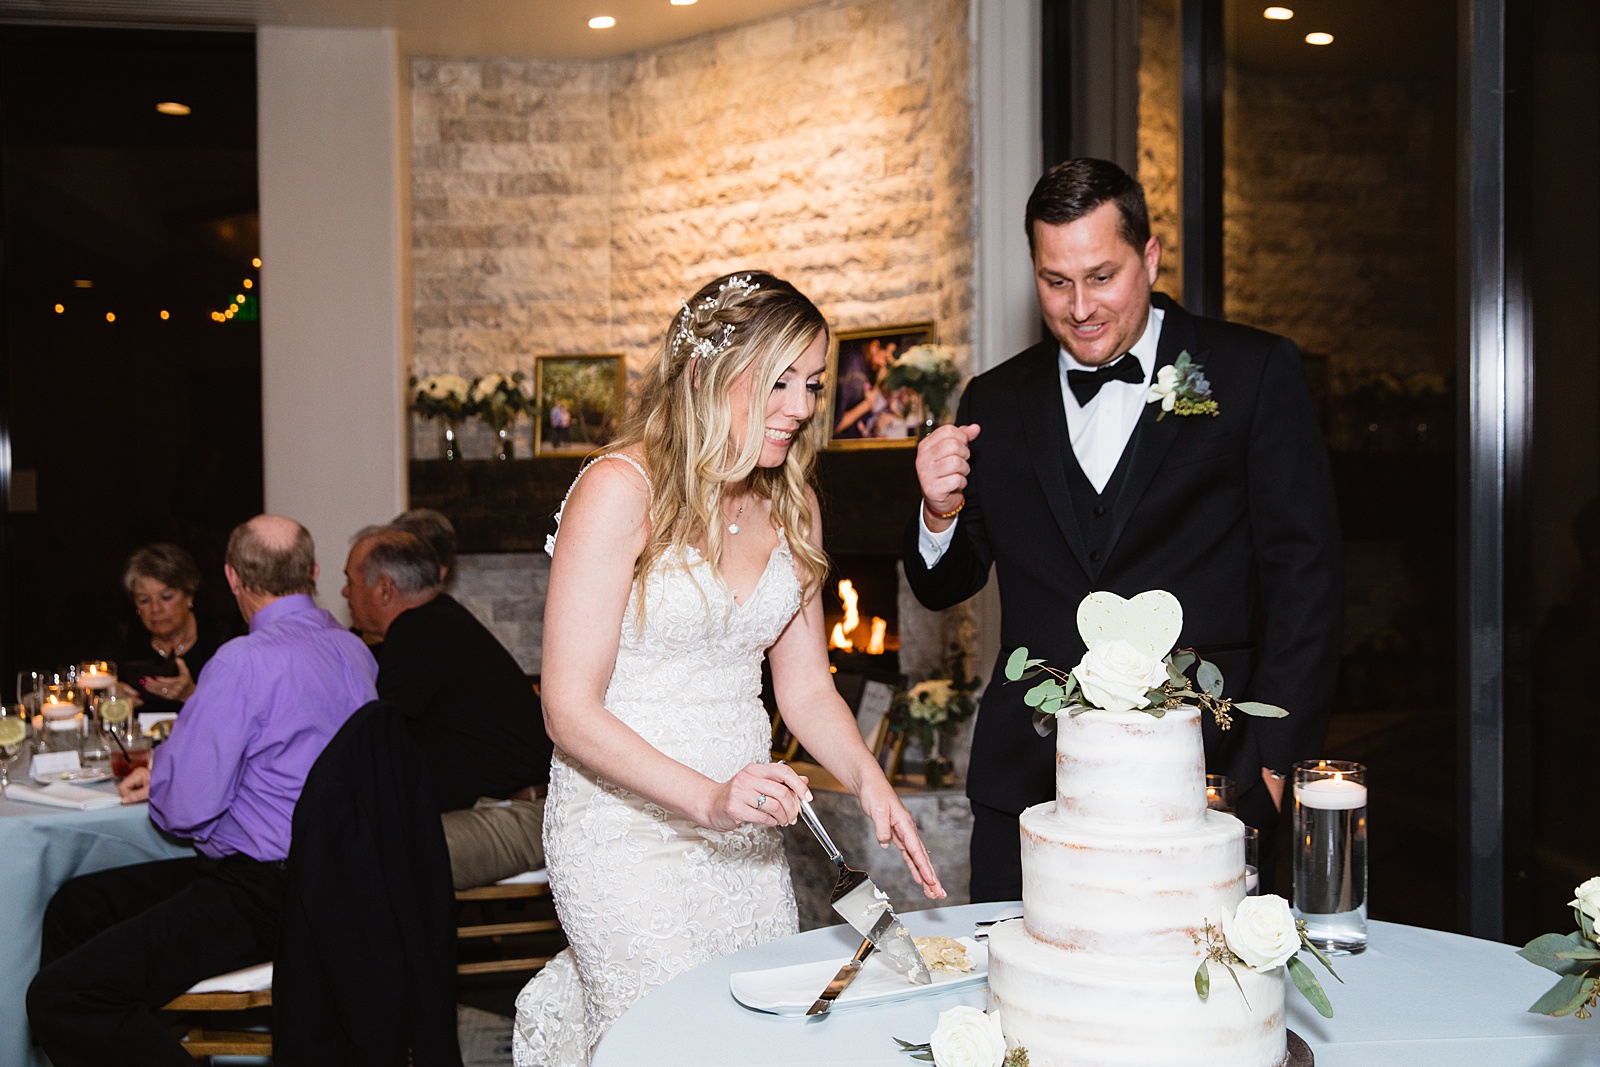 Newlyweds cutting their wedding cake at their Troon North wedding reception by Arizona wedding photographer PMA Photography.